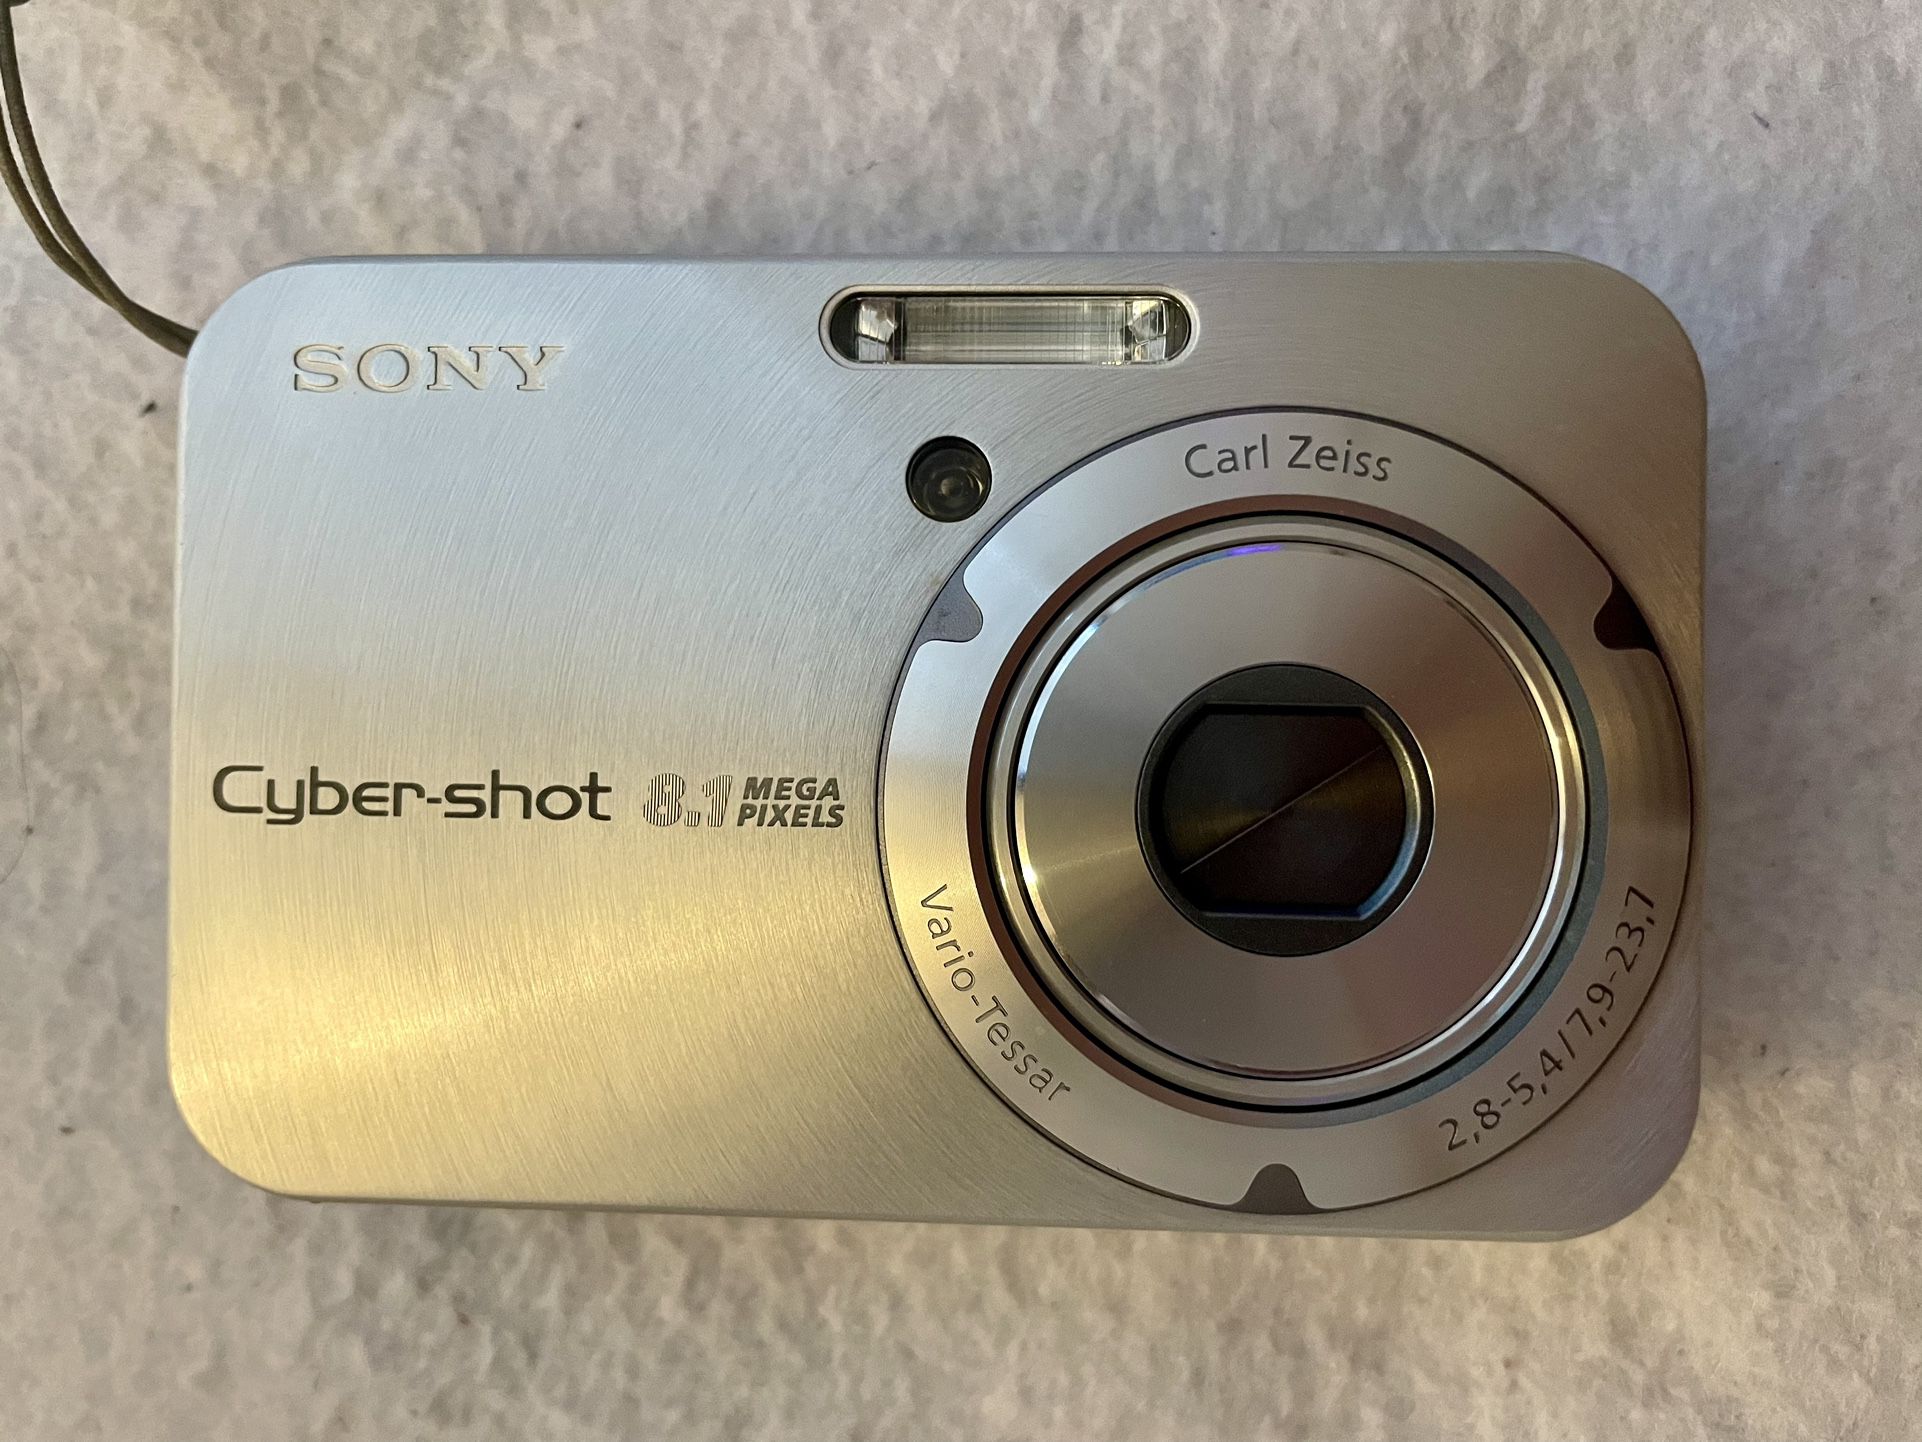 Sony Cyber-shot DSC-N1 8.1MP Digital Camera - Silver